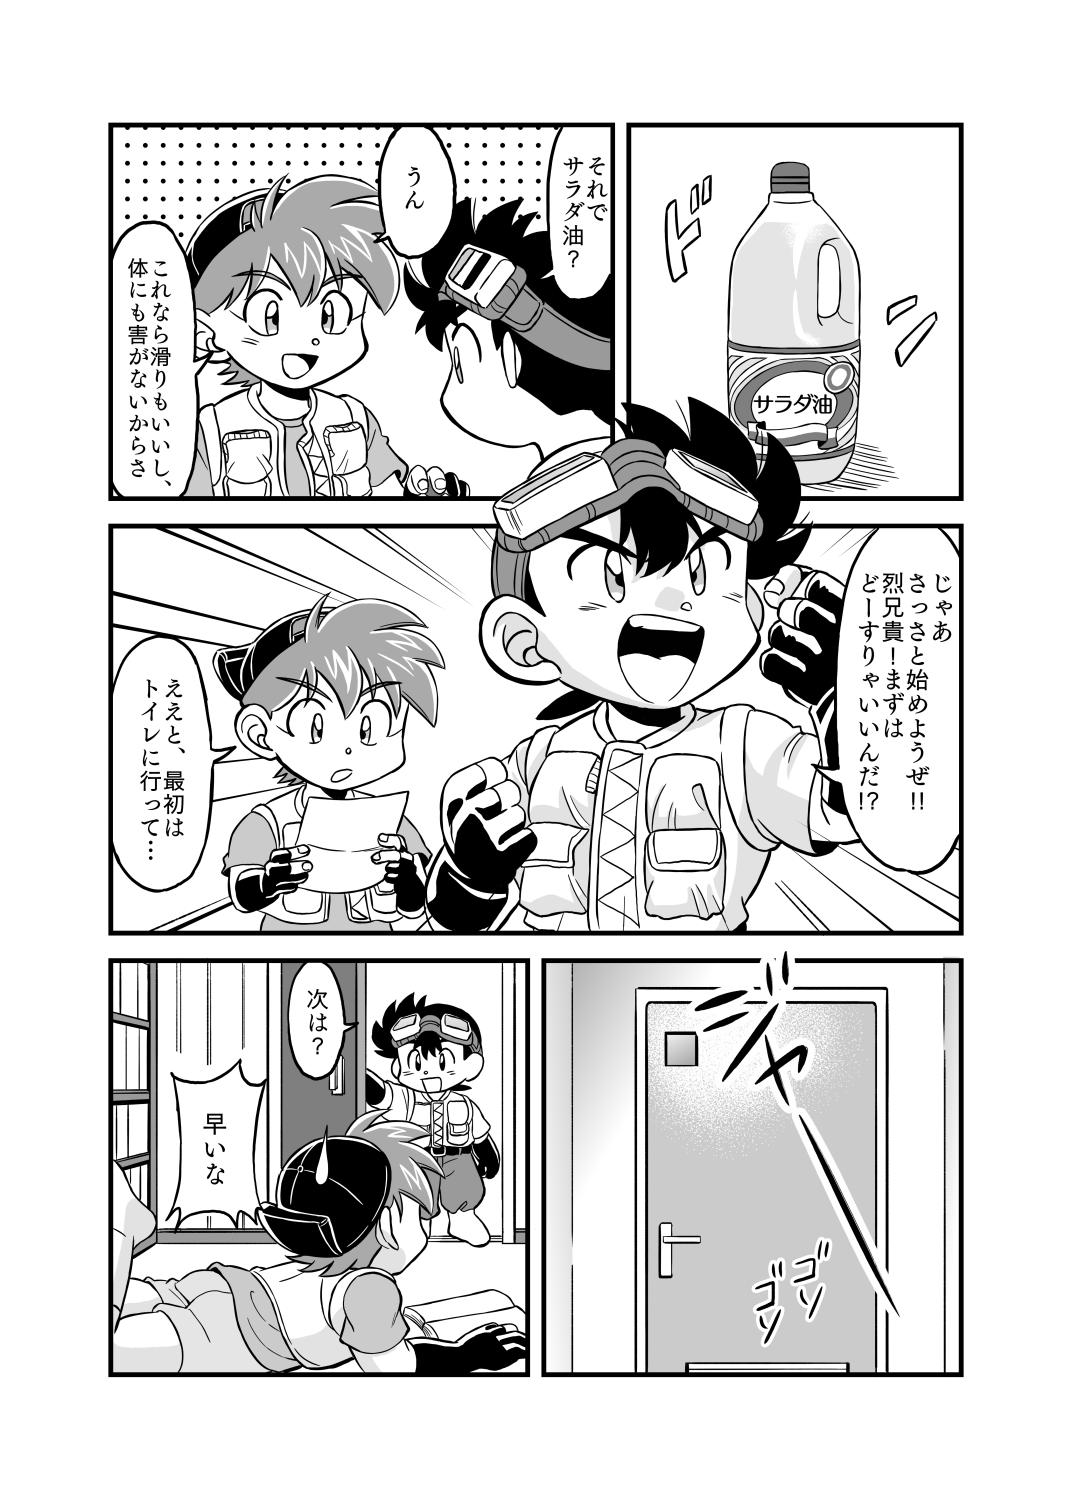 Hidden 性の世界へレッツゴー!! - Bakusou kyoudai lets and go Spa - Page 8